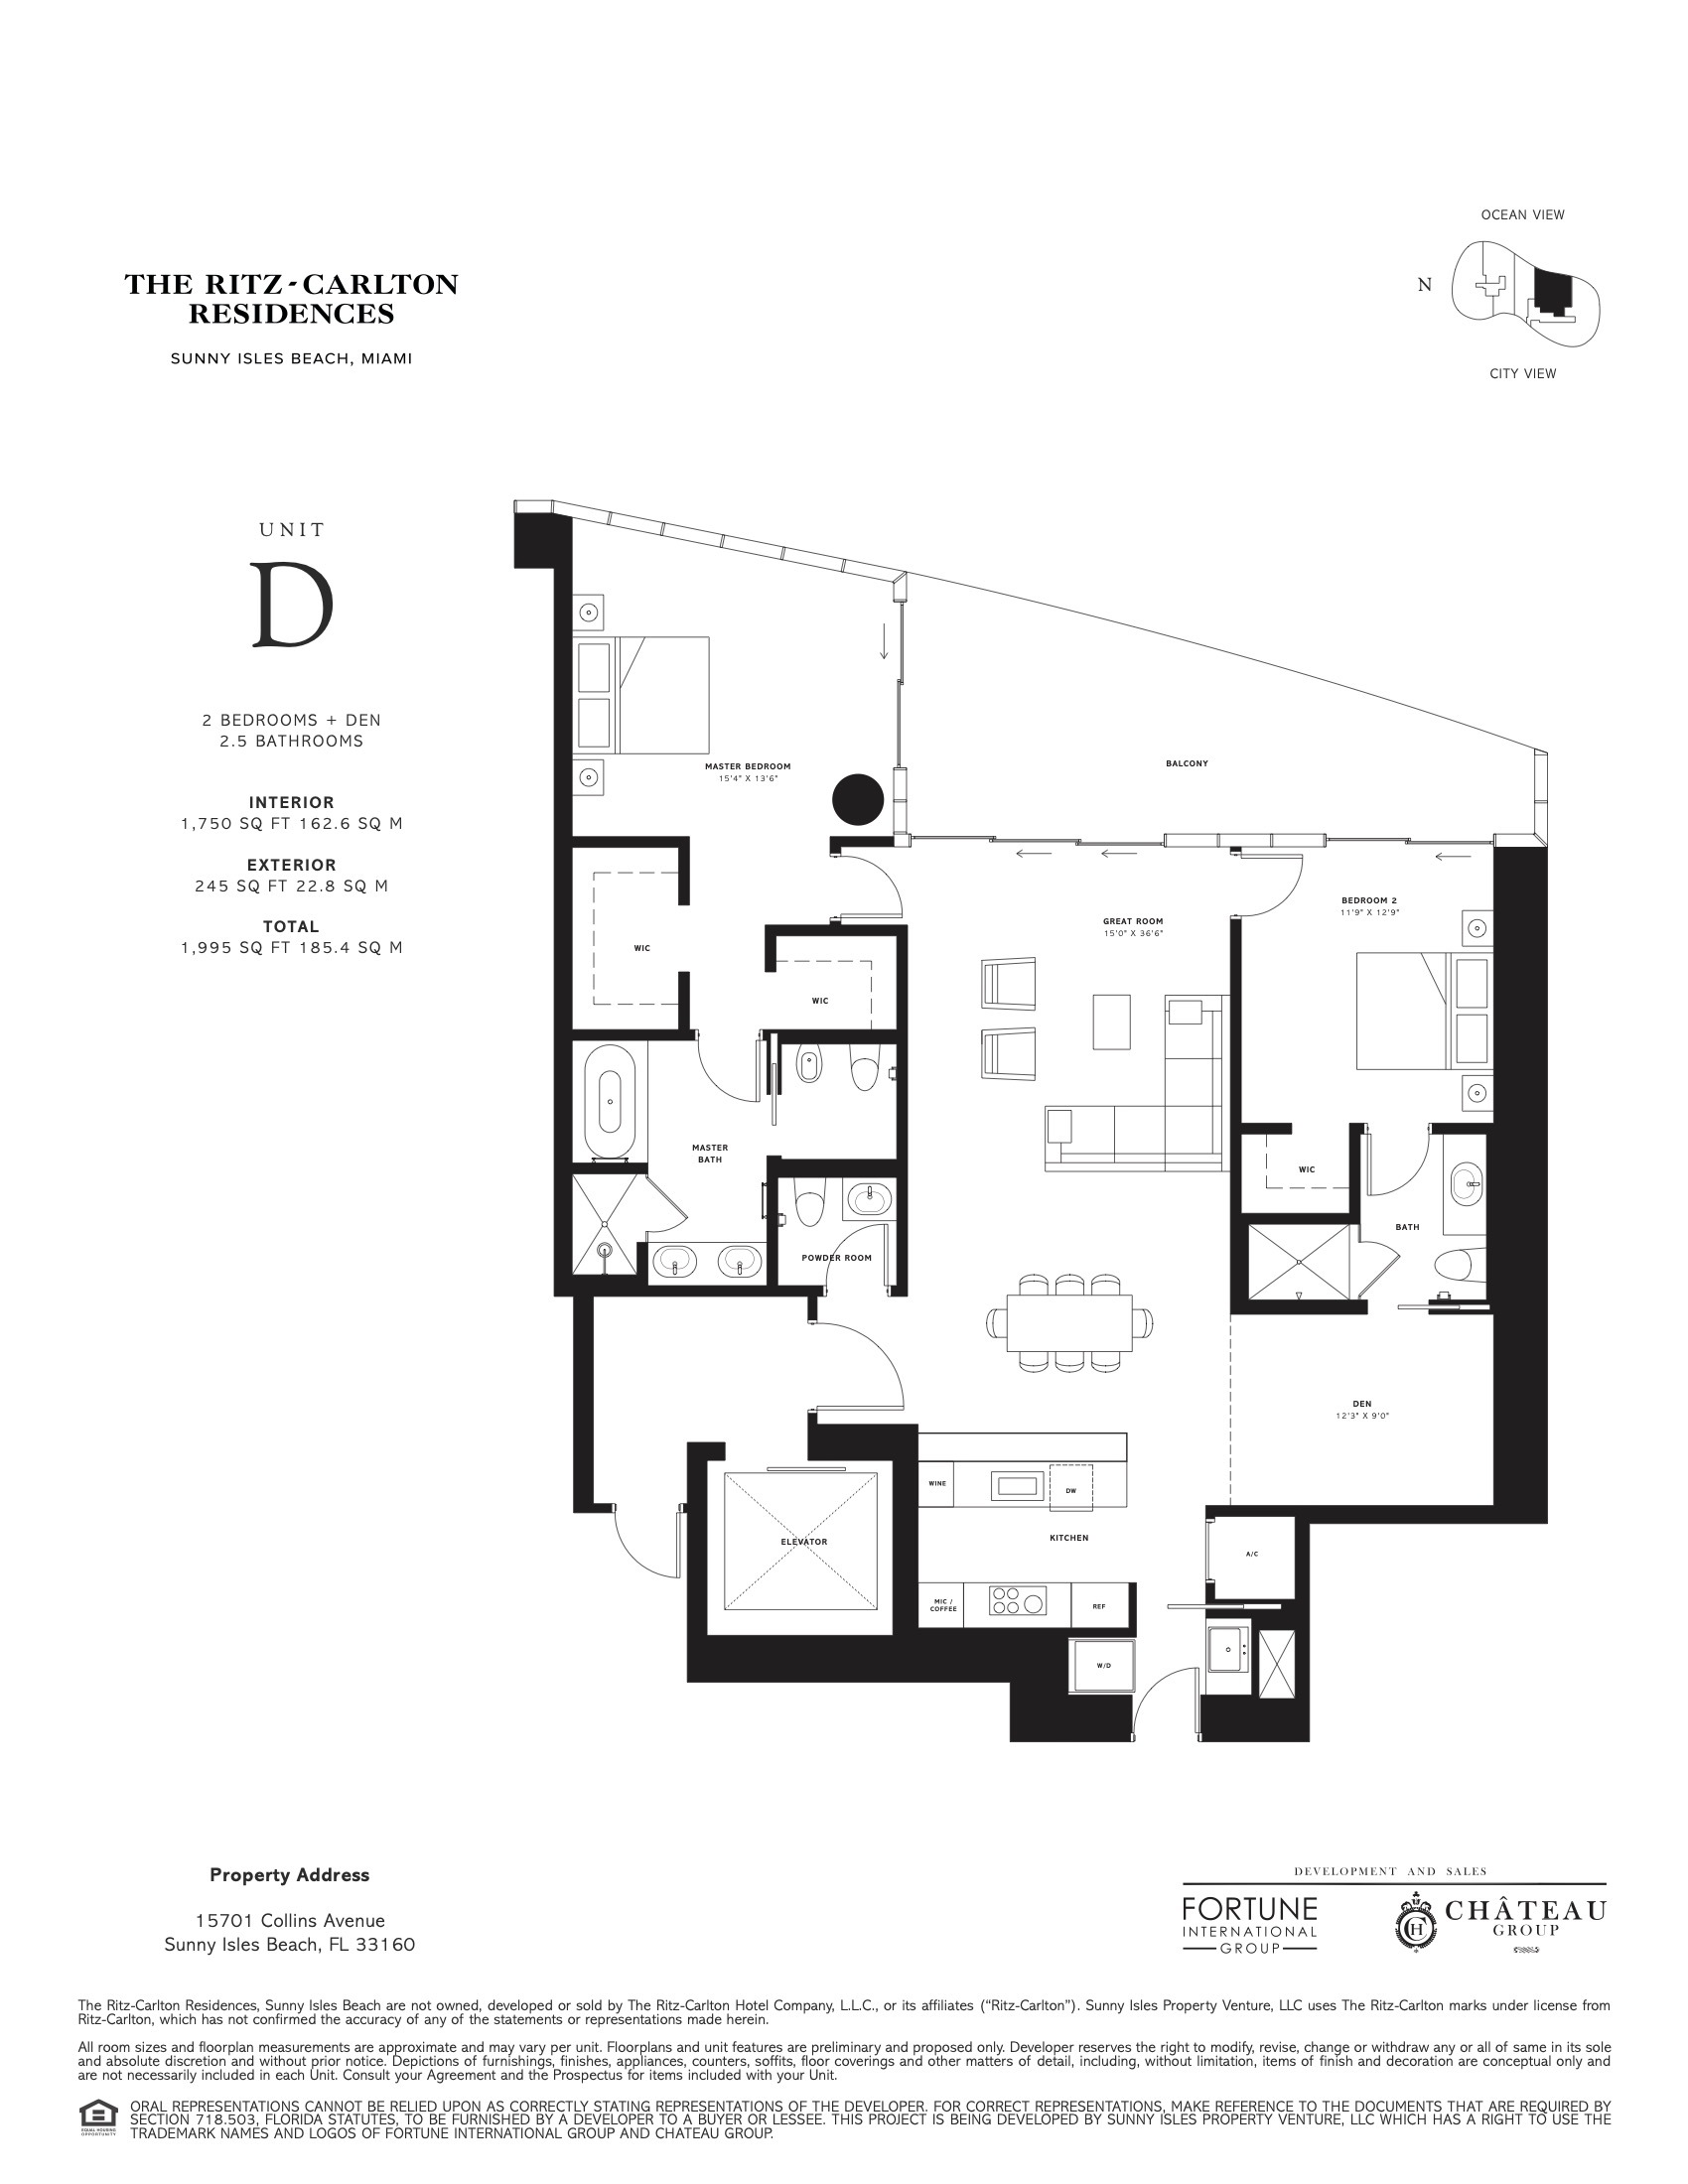 Floor Plan for Ritz-Carlton Sunny Isles Floorplans, Unit D